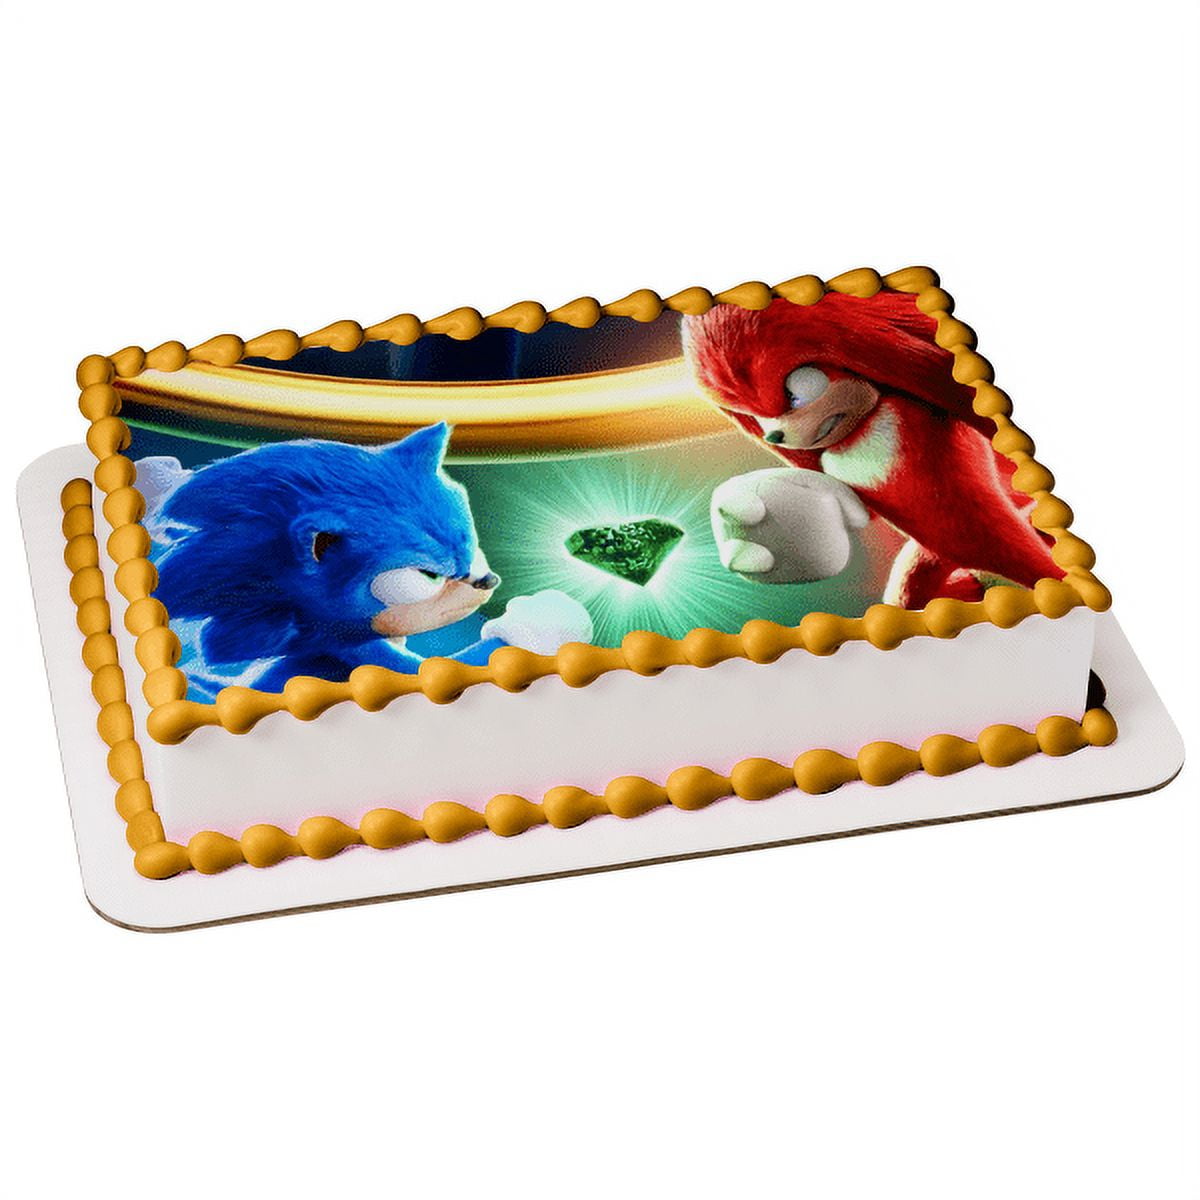 Sonic the Hedgehog - Edible Cake Topper - 11.7 x 17.5 Inches 1/2 Sheet  rectangular 